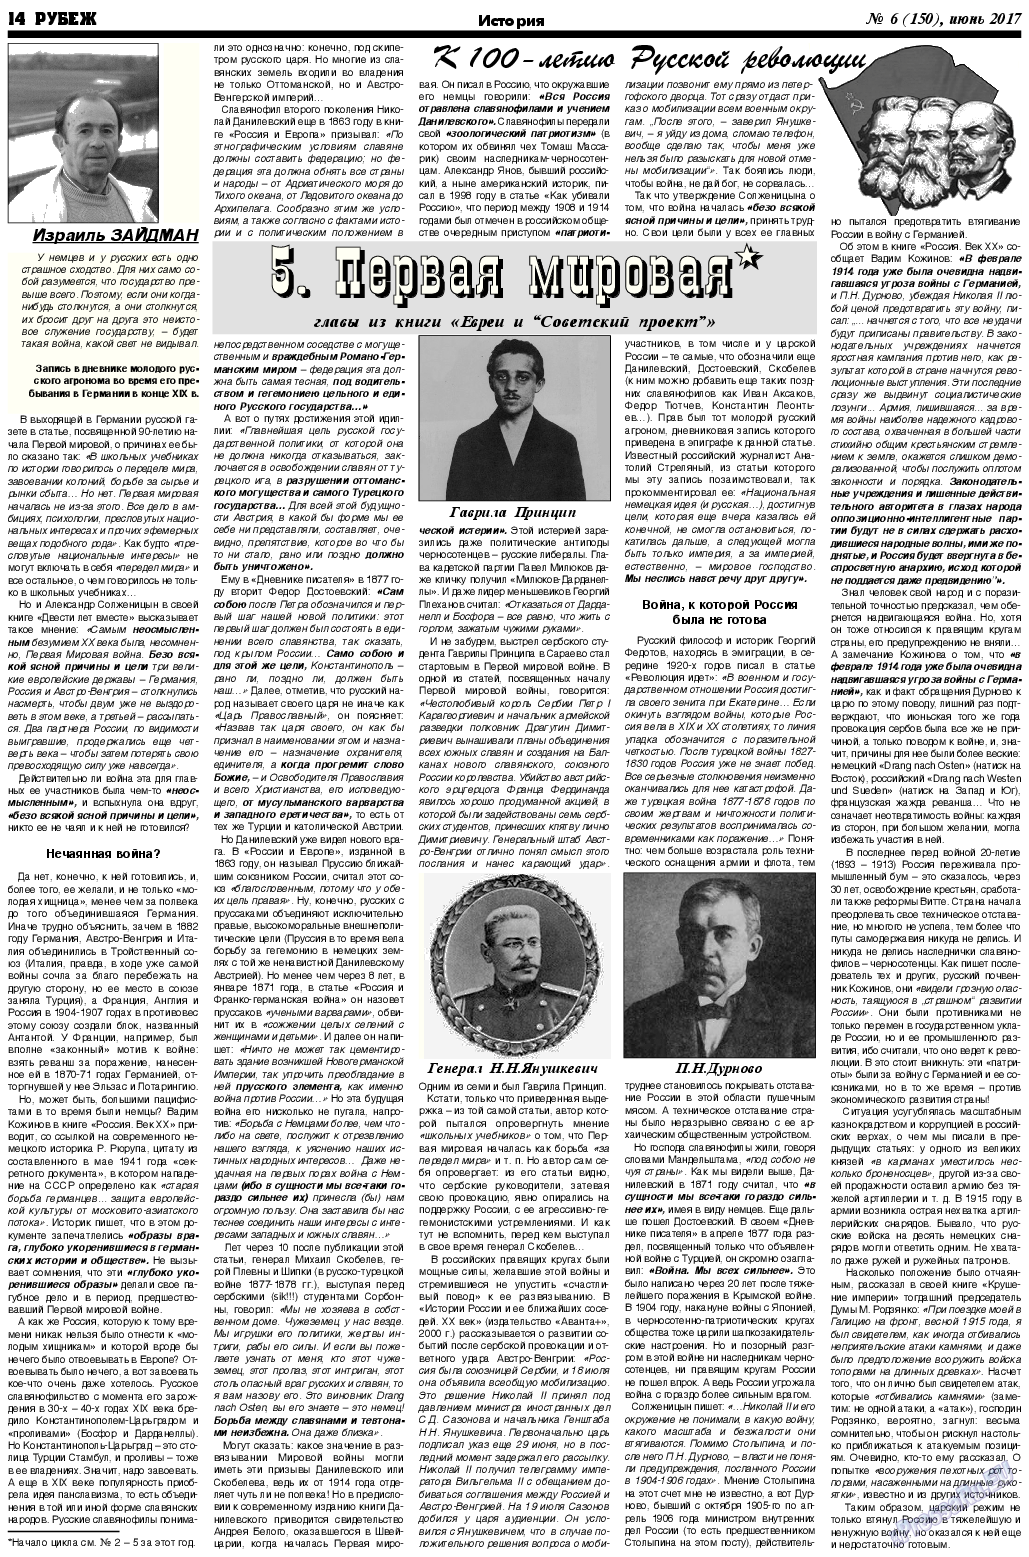 Рубеж, газета. 2017 №6 стр.14